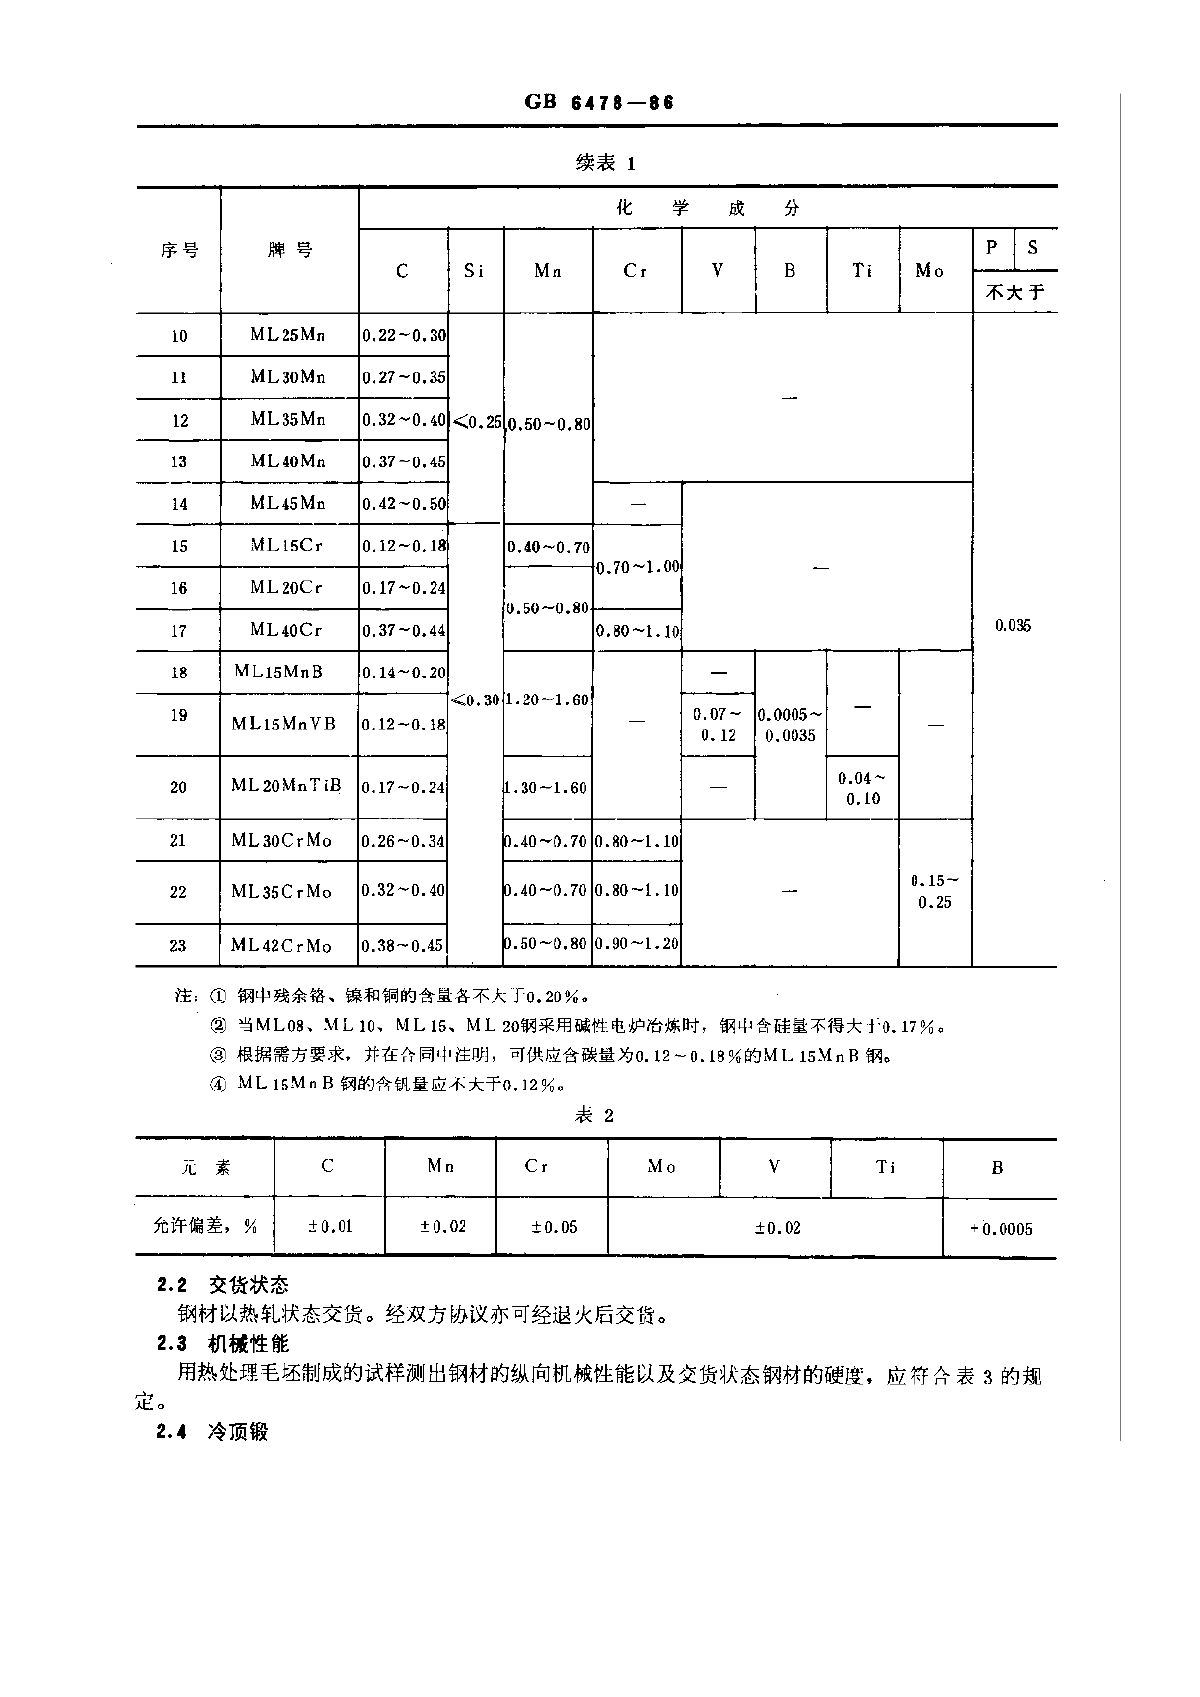 GB6478-86泠镦钢技术条件-图二